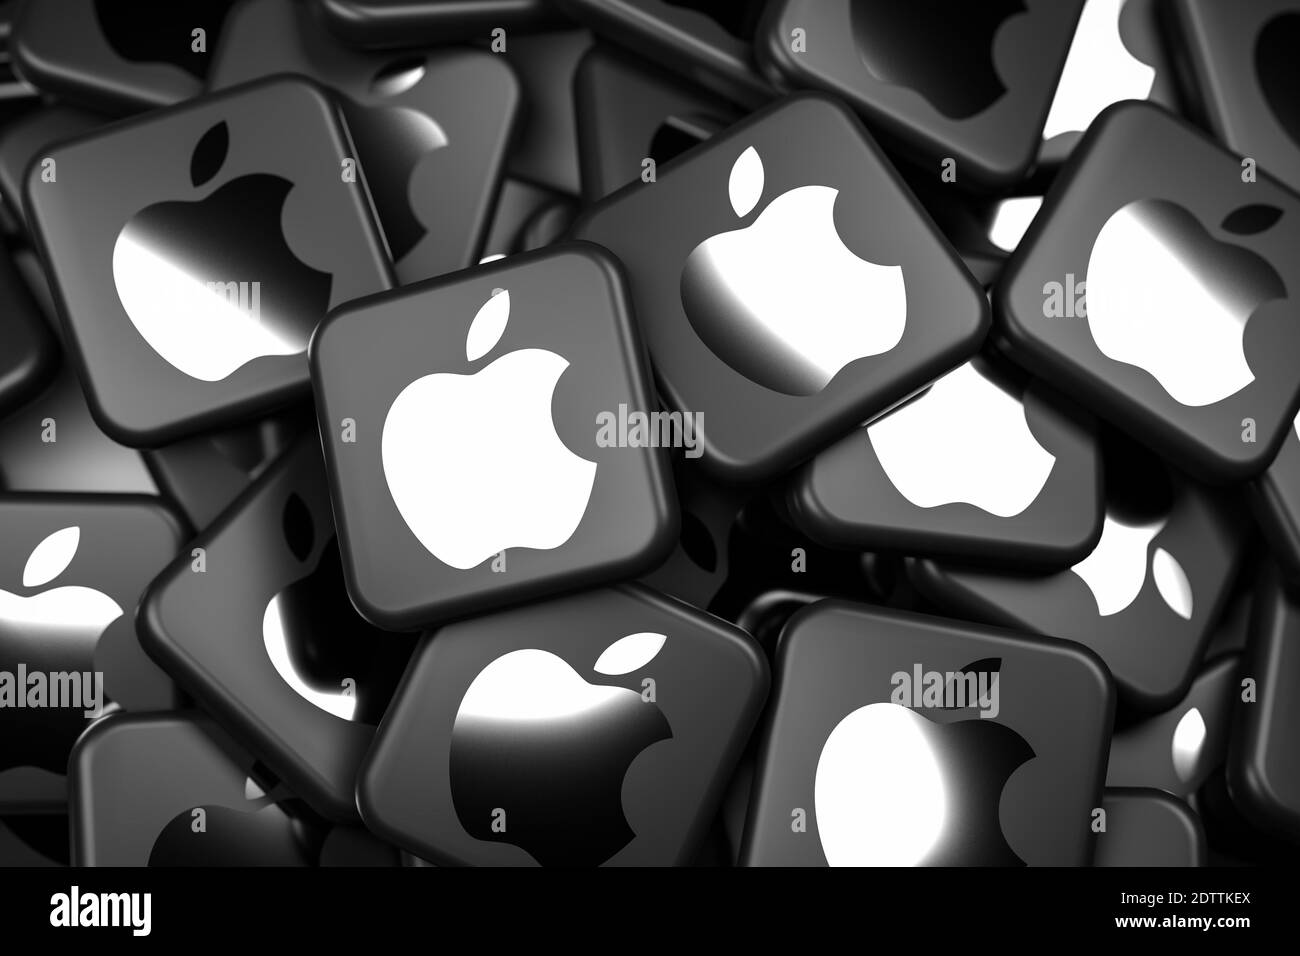 Apple company logo black background Black and White Stock Photos & Images -  Alamy